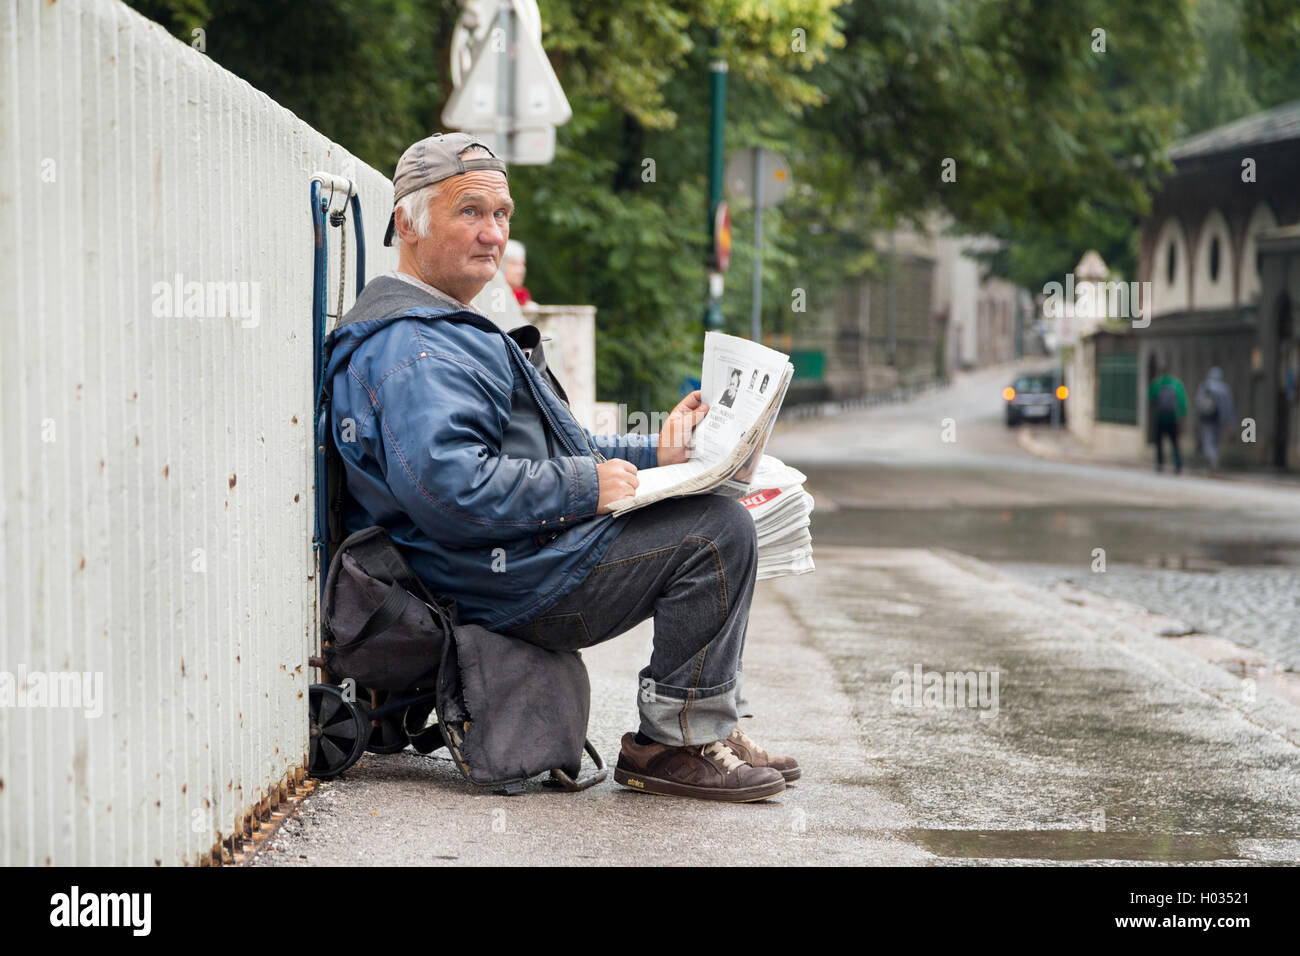 SARAJEVO, BOSNIA AND HERZEGOVINA: JUNE 19, 2014: Elderly newspaper salesman sitting on the cart on street. Stock Photo